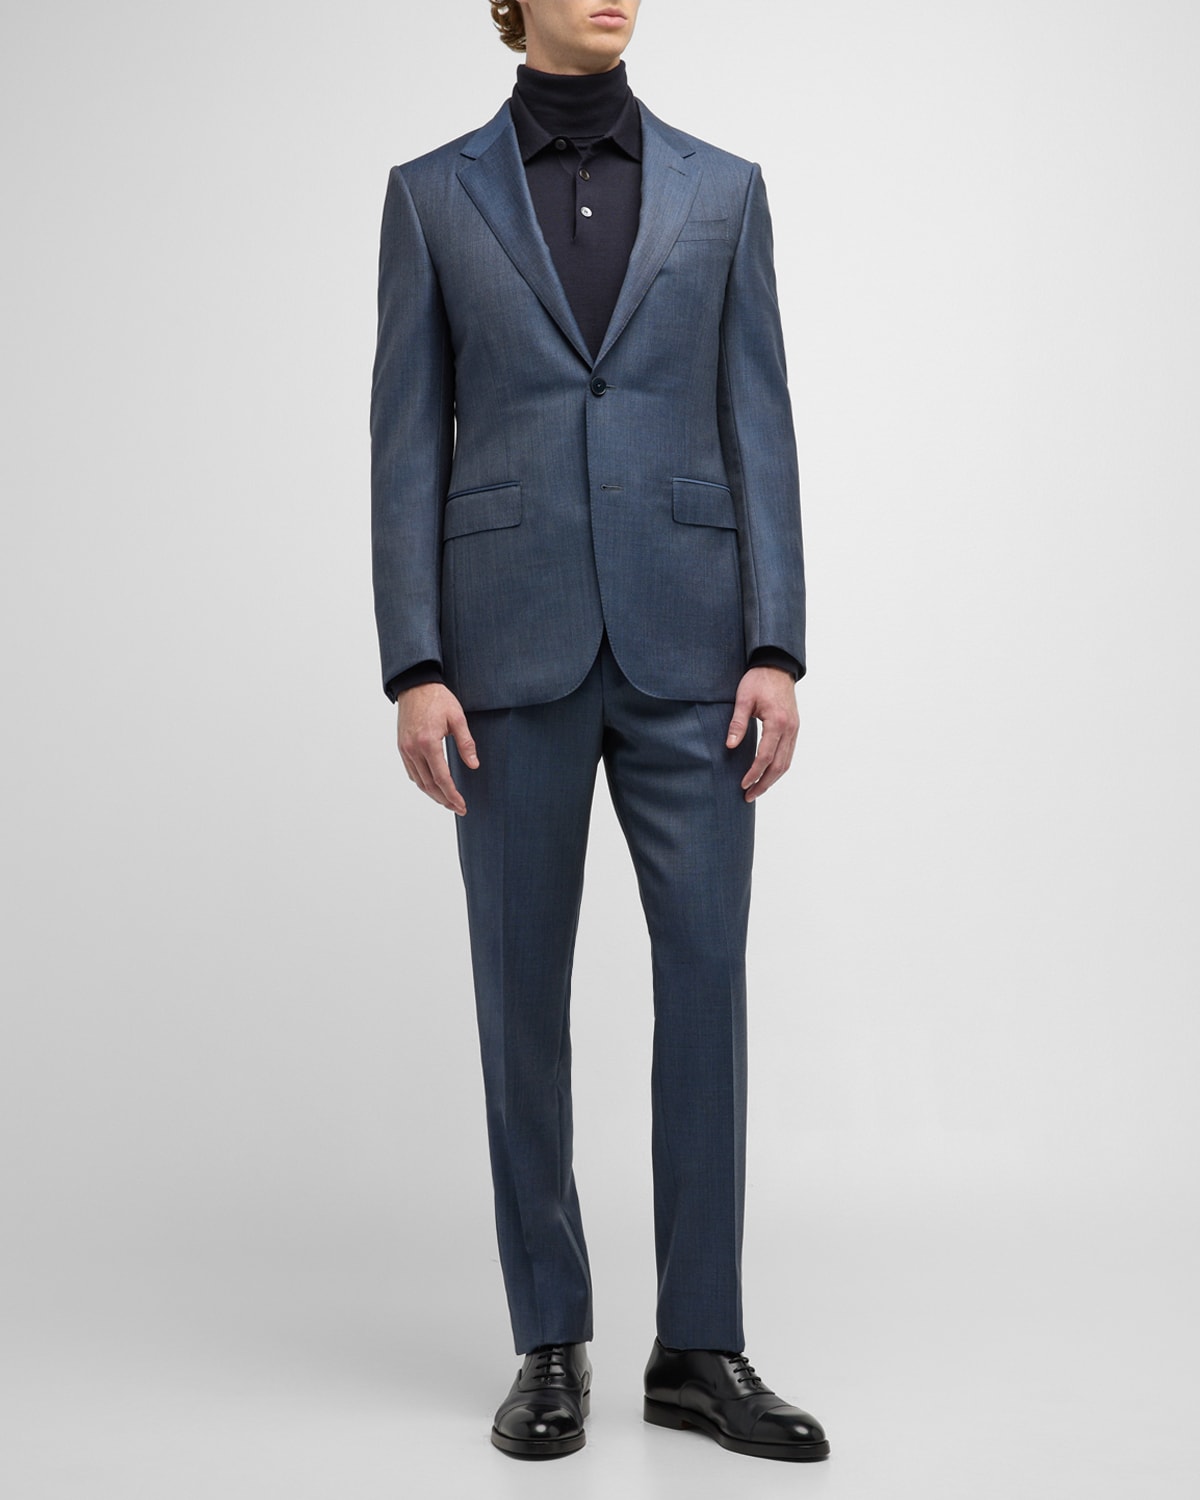 ZEGNA Men's Wool Plaid Suit | Neiman Marcus